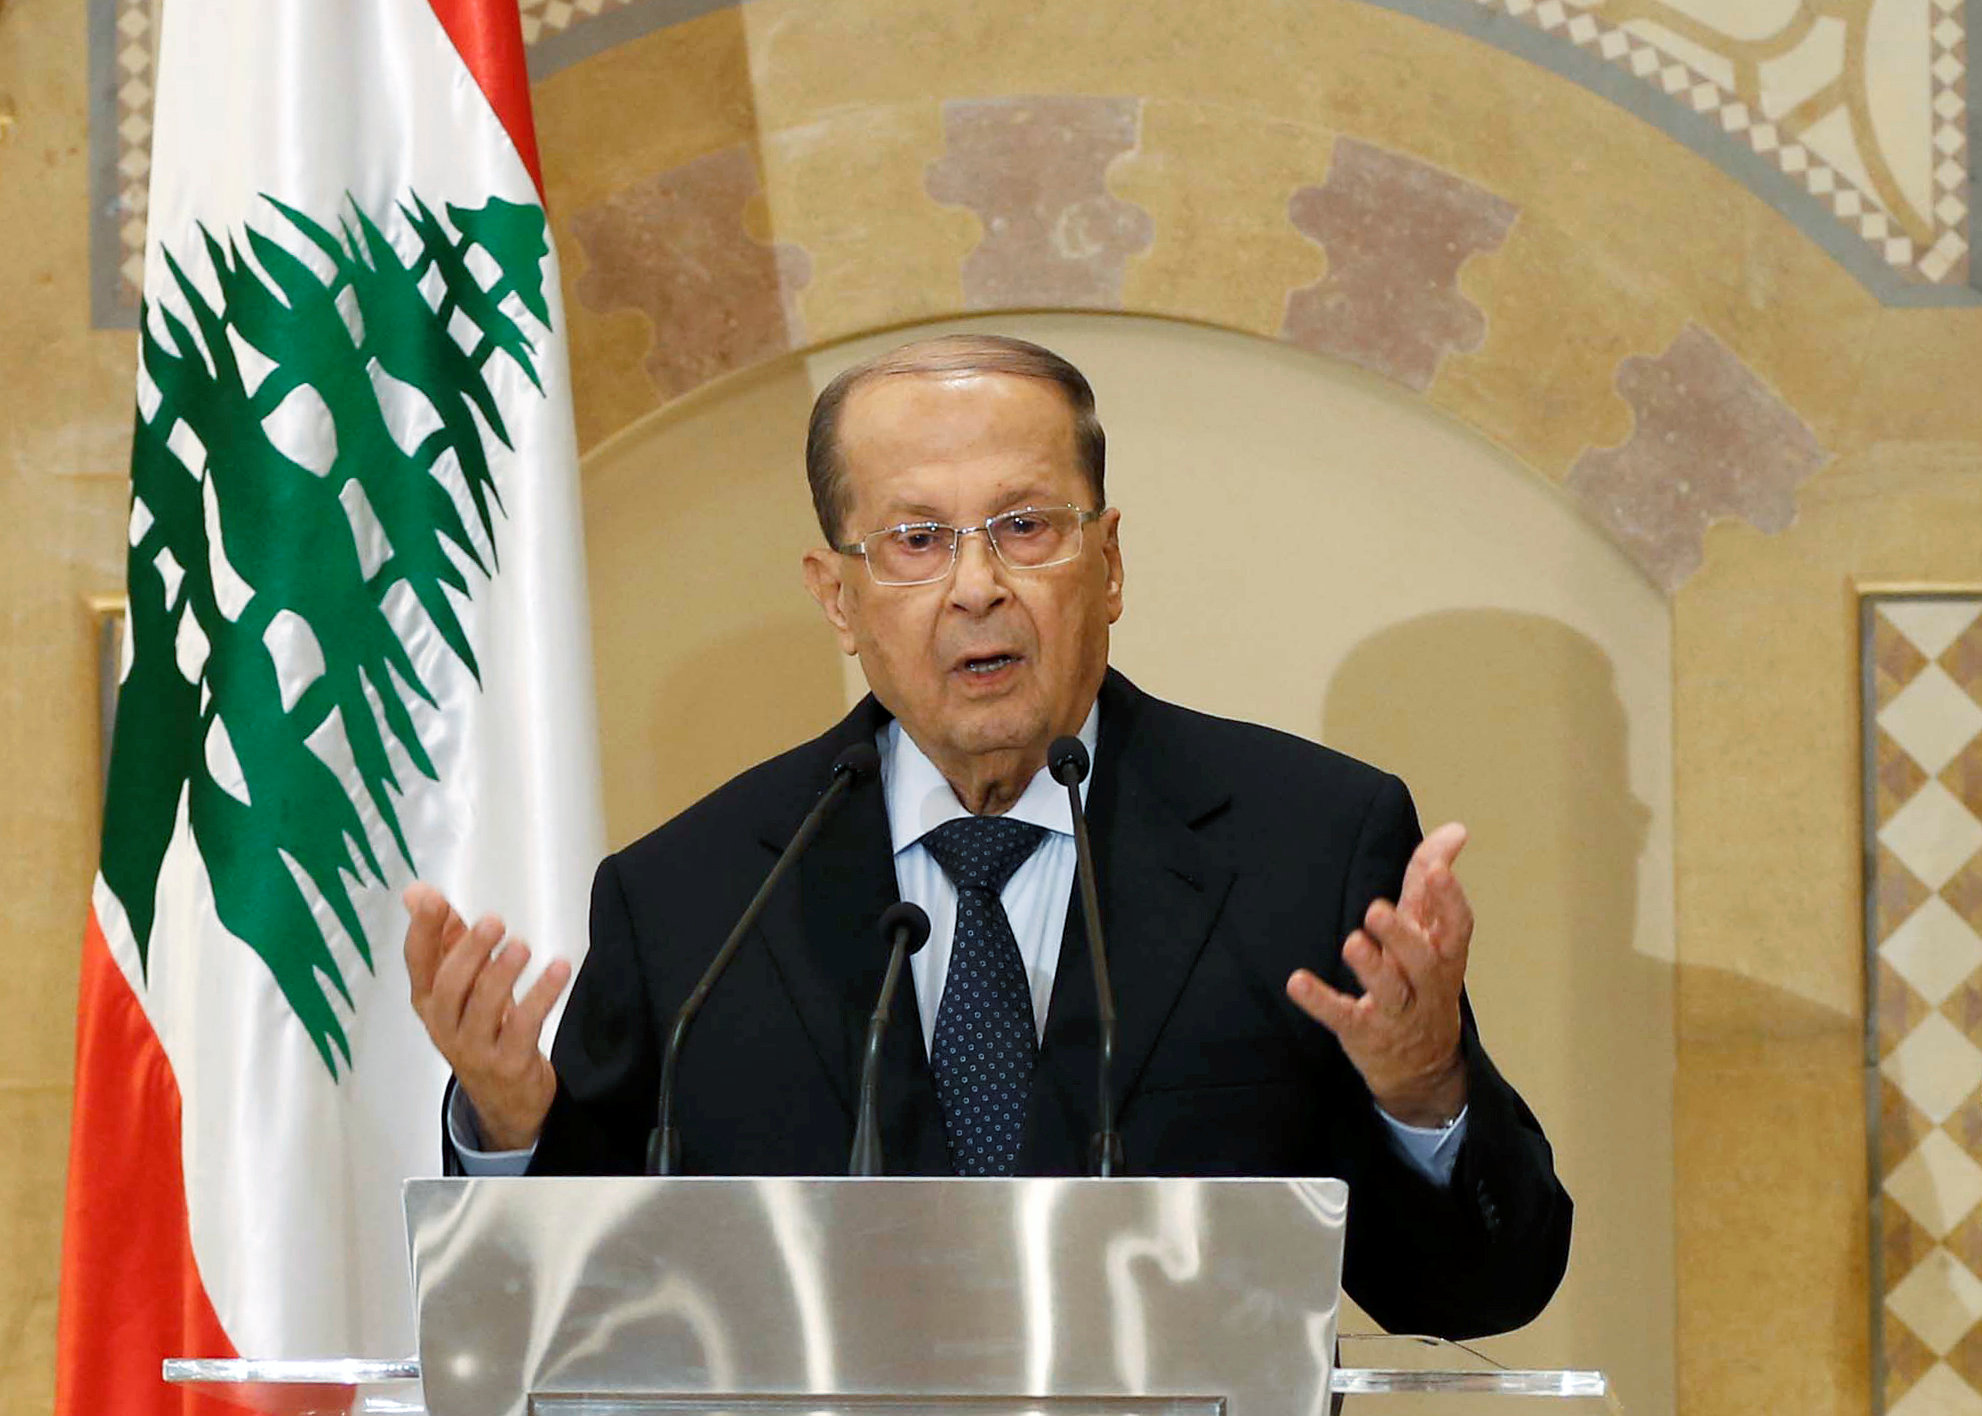 Michel Aoun, President of Lebanon